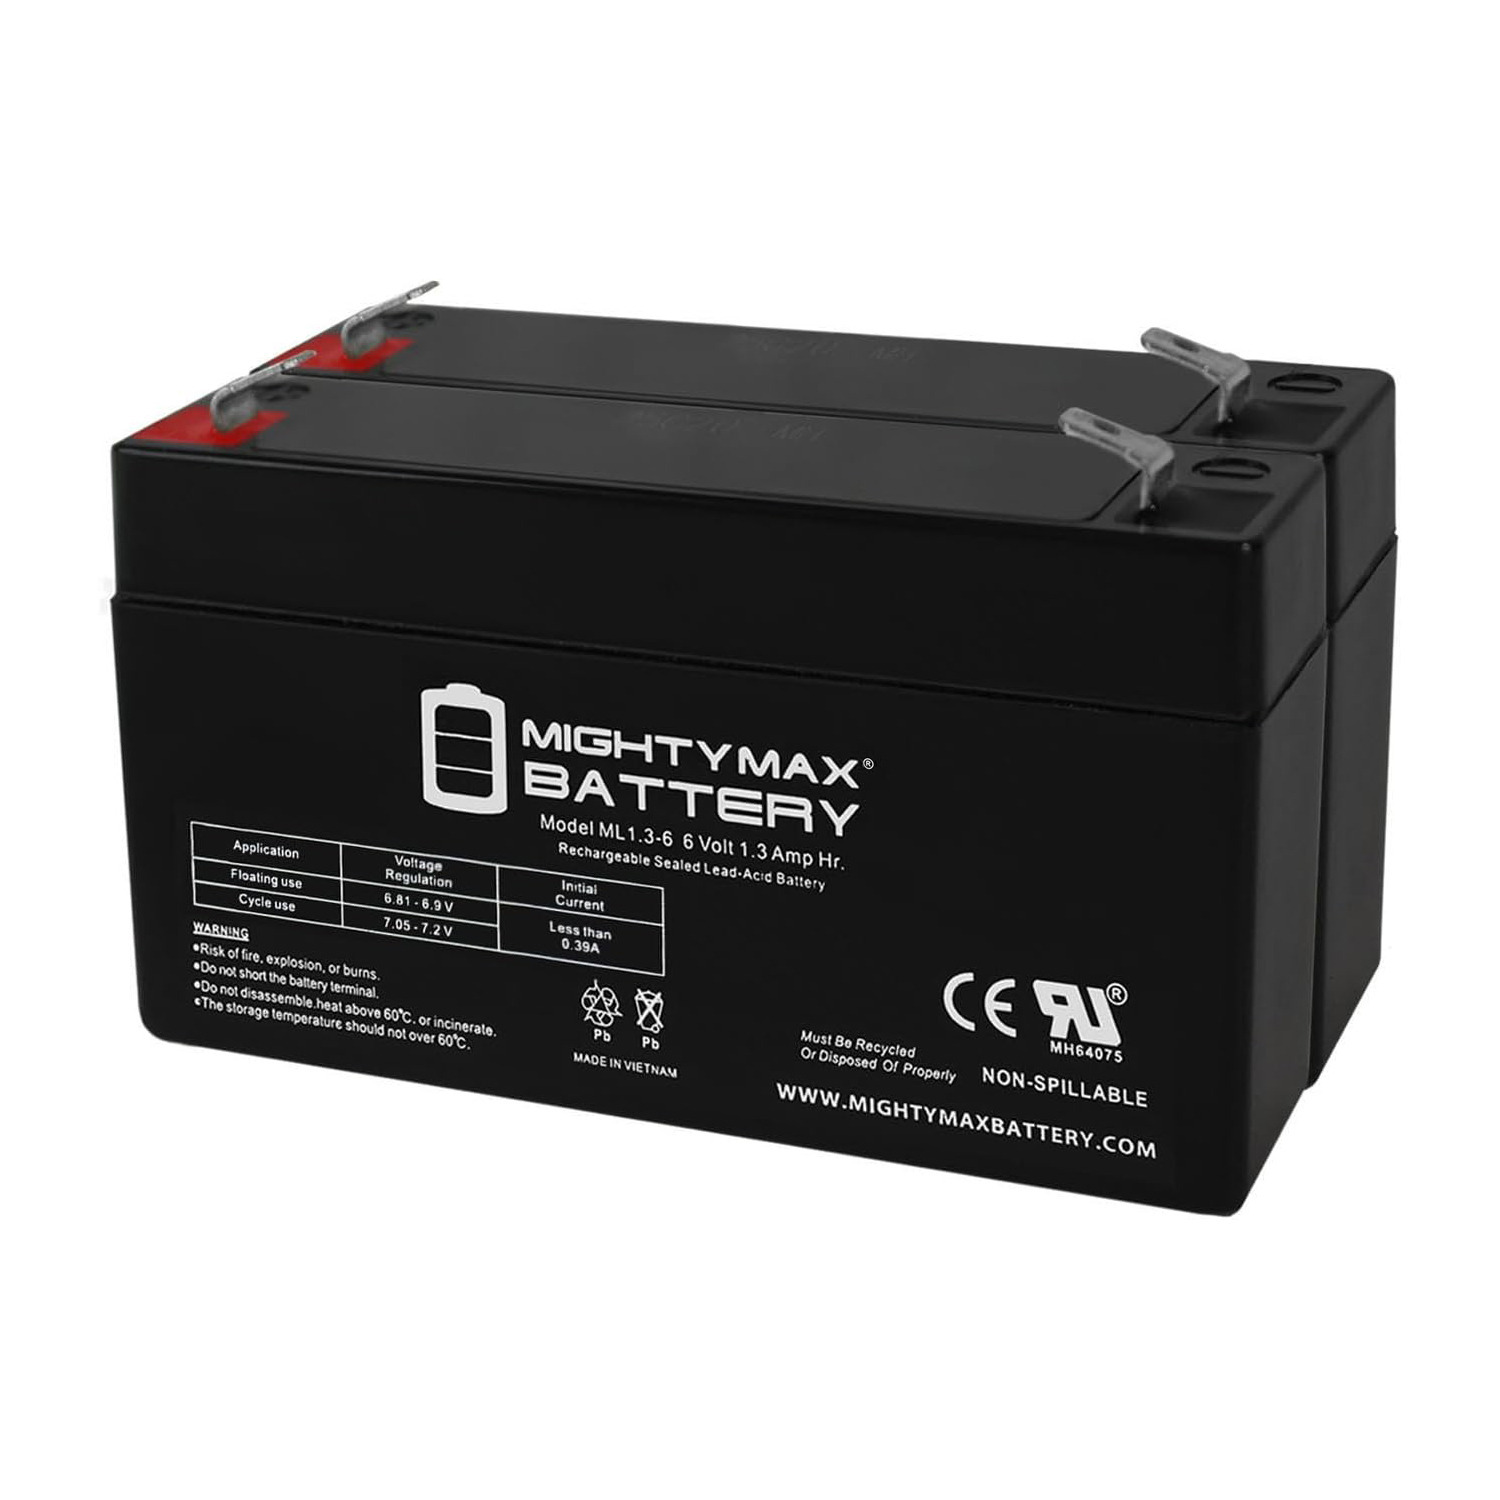 6V 1.3Ah Sonnenschein CR613 Emergency Light Battery - 2 Pack